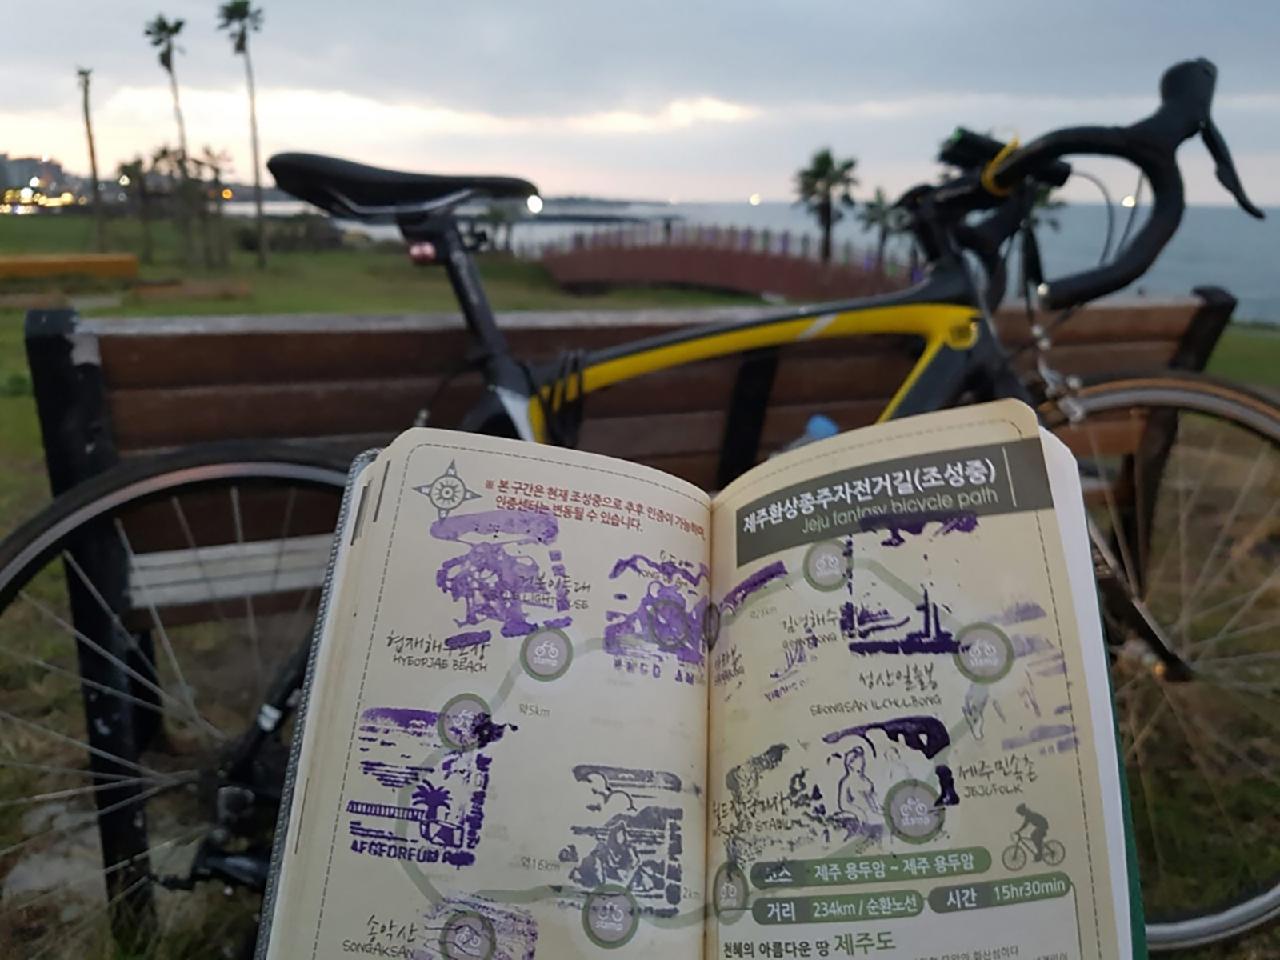 Cycling on Jeju